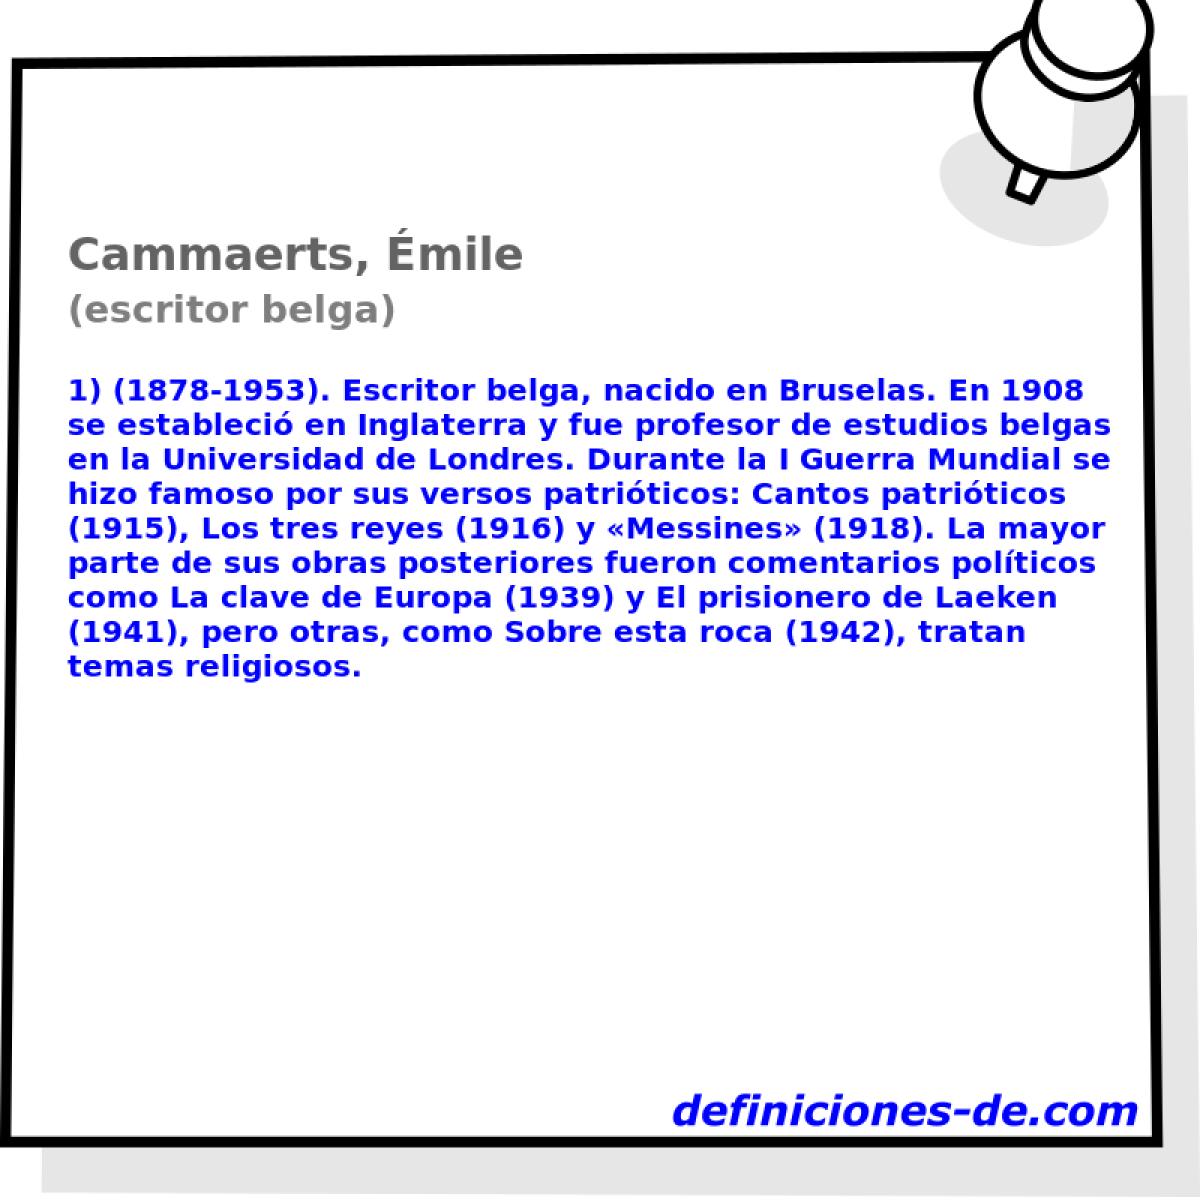 Cammaerts, mile (escritor belga)